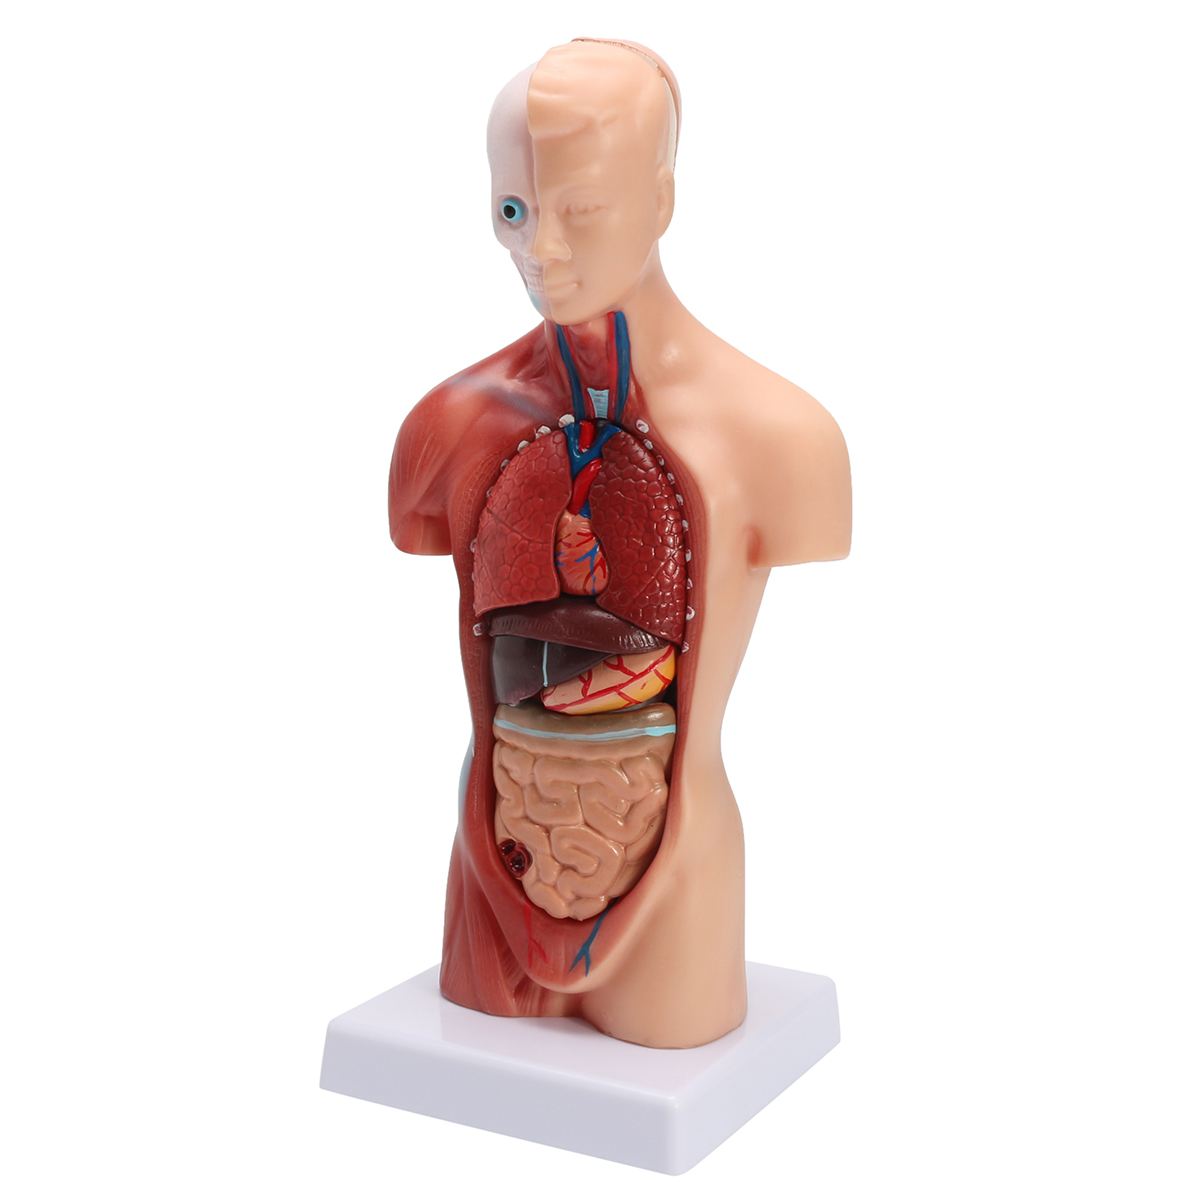 Human Torso Body Model Anatomy Anatomical Medical Internal Organs For Teaching Detachable Educational Medical Science Model New